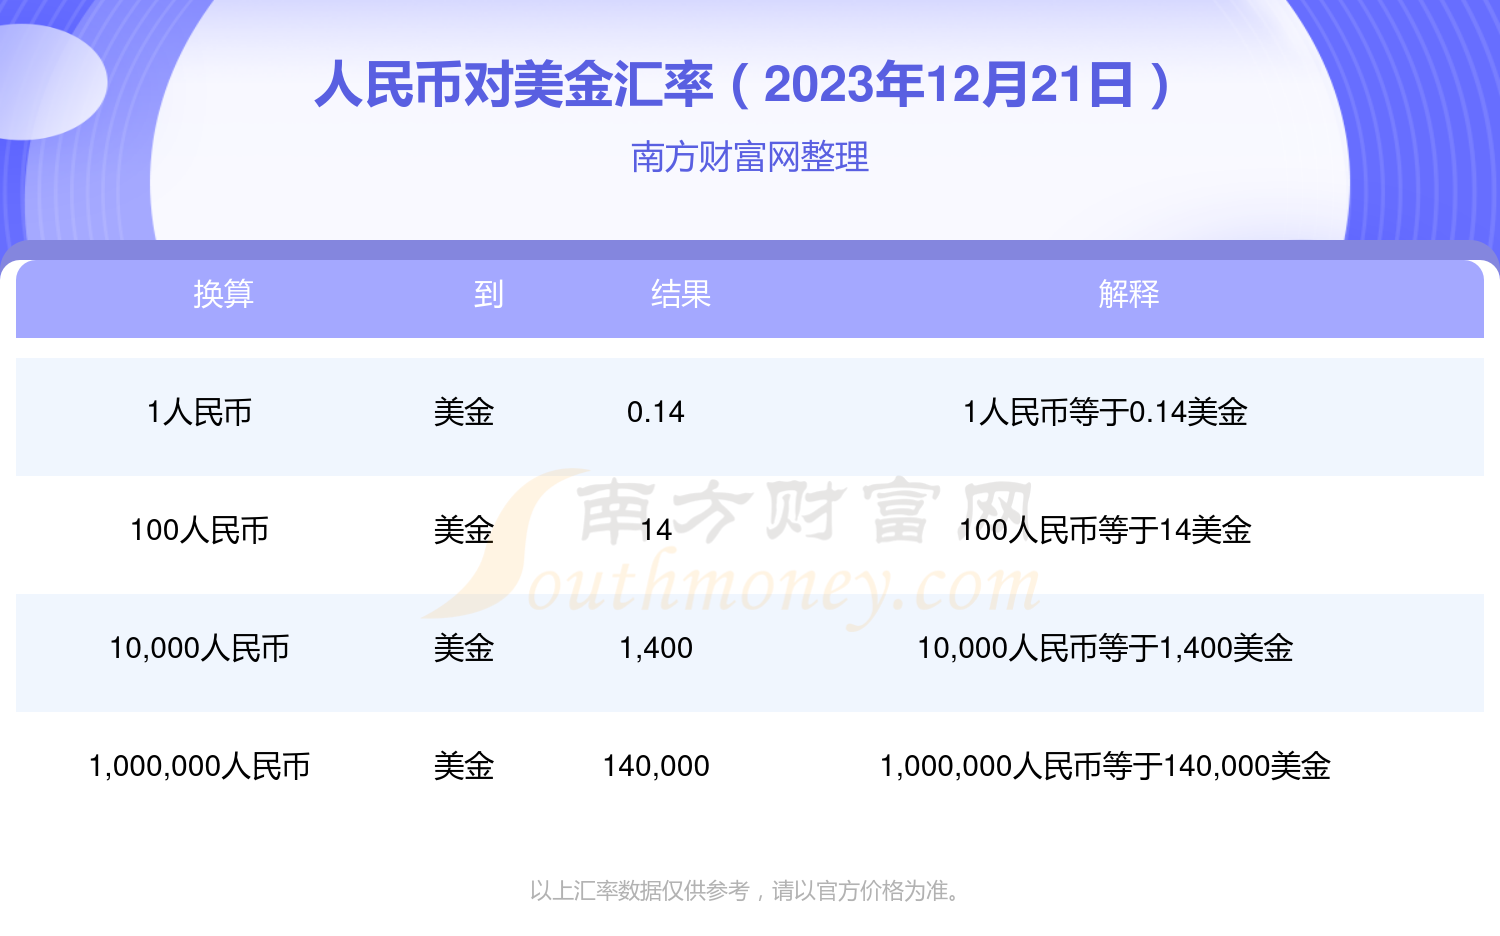 December 21, 2023, RMB exchange US dollar exchange rate query